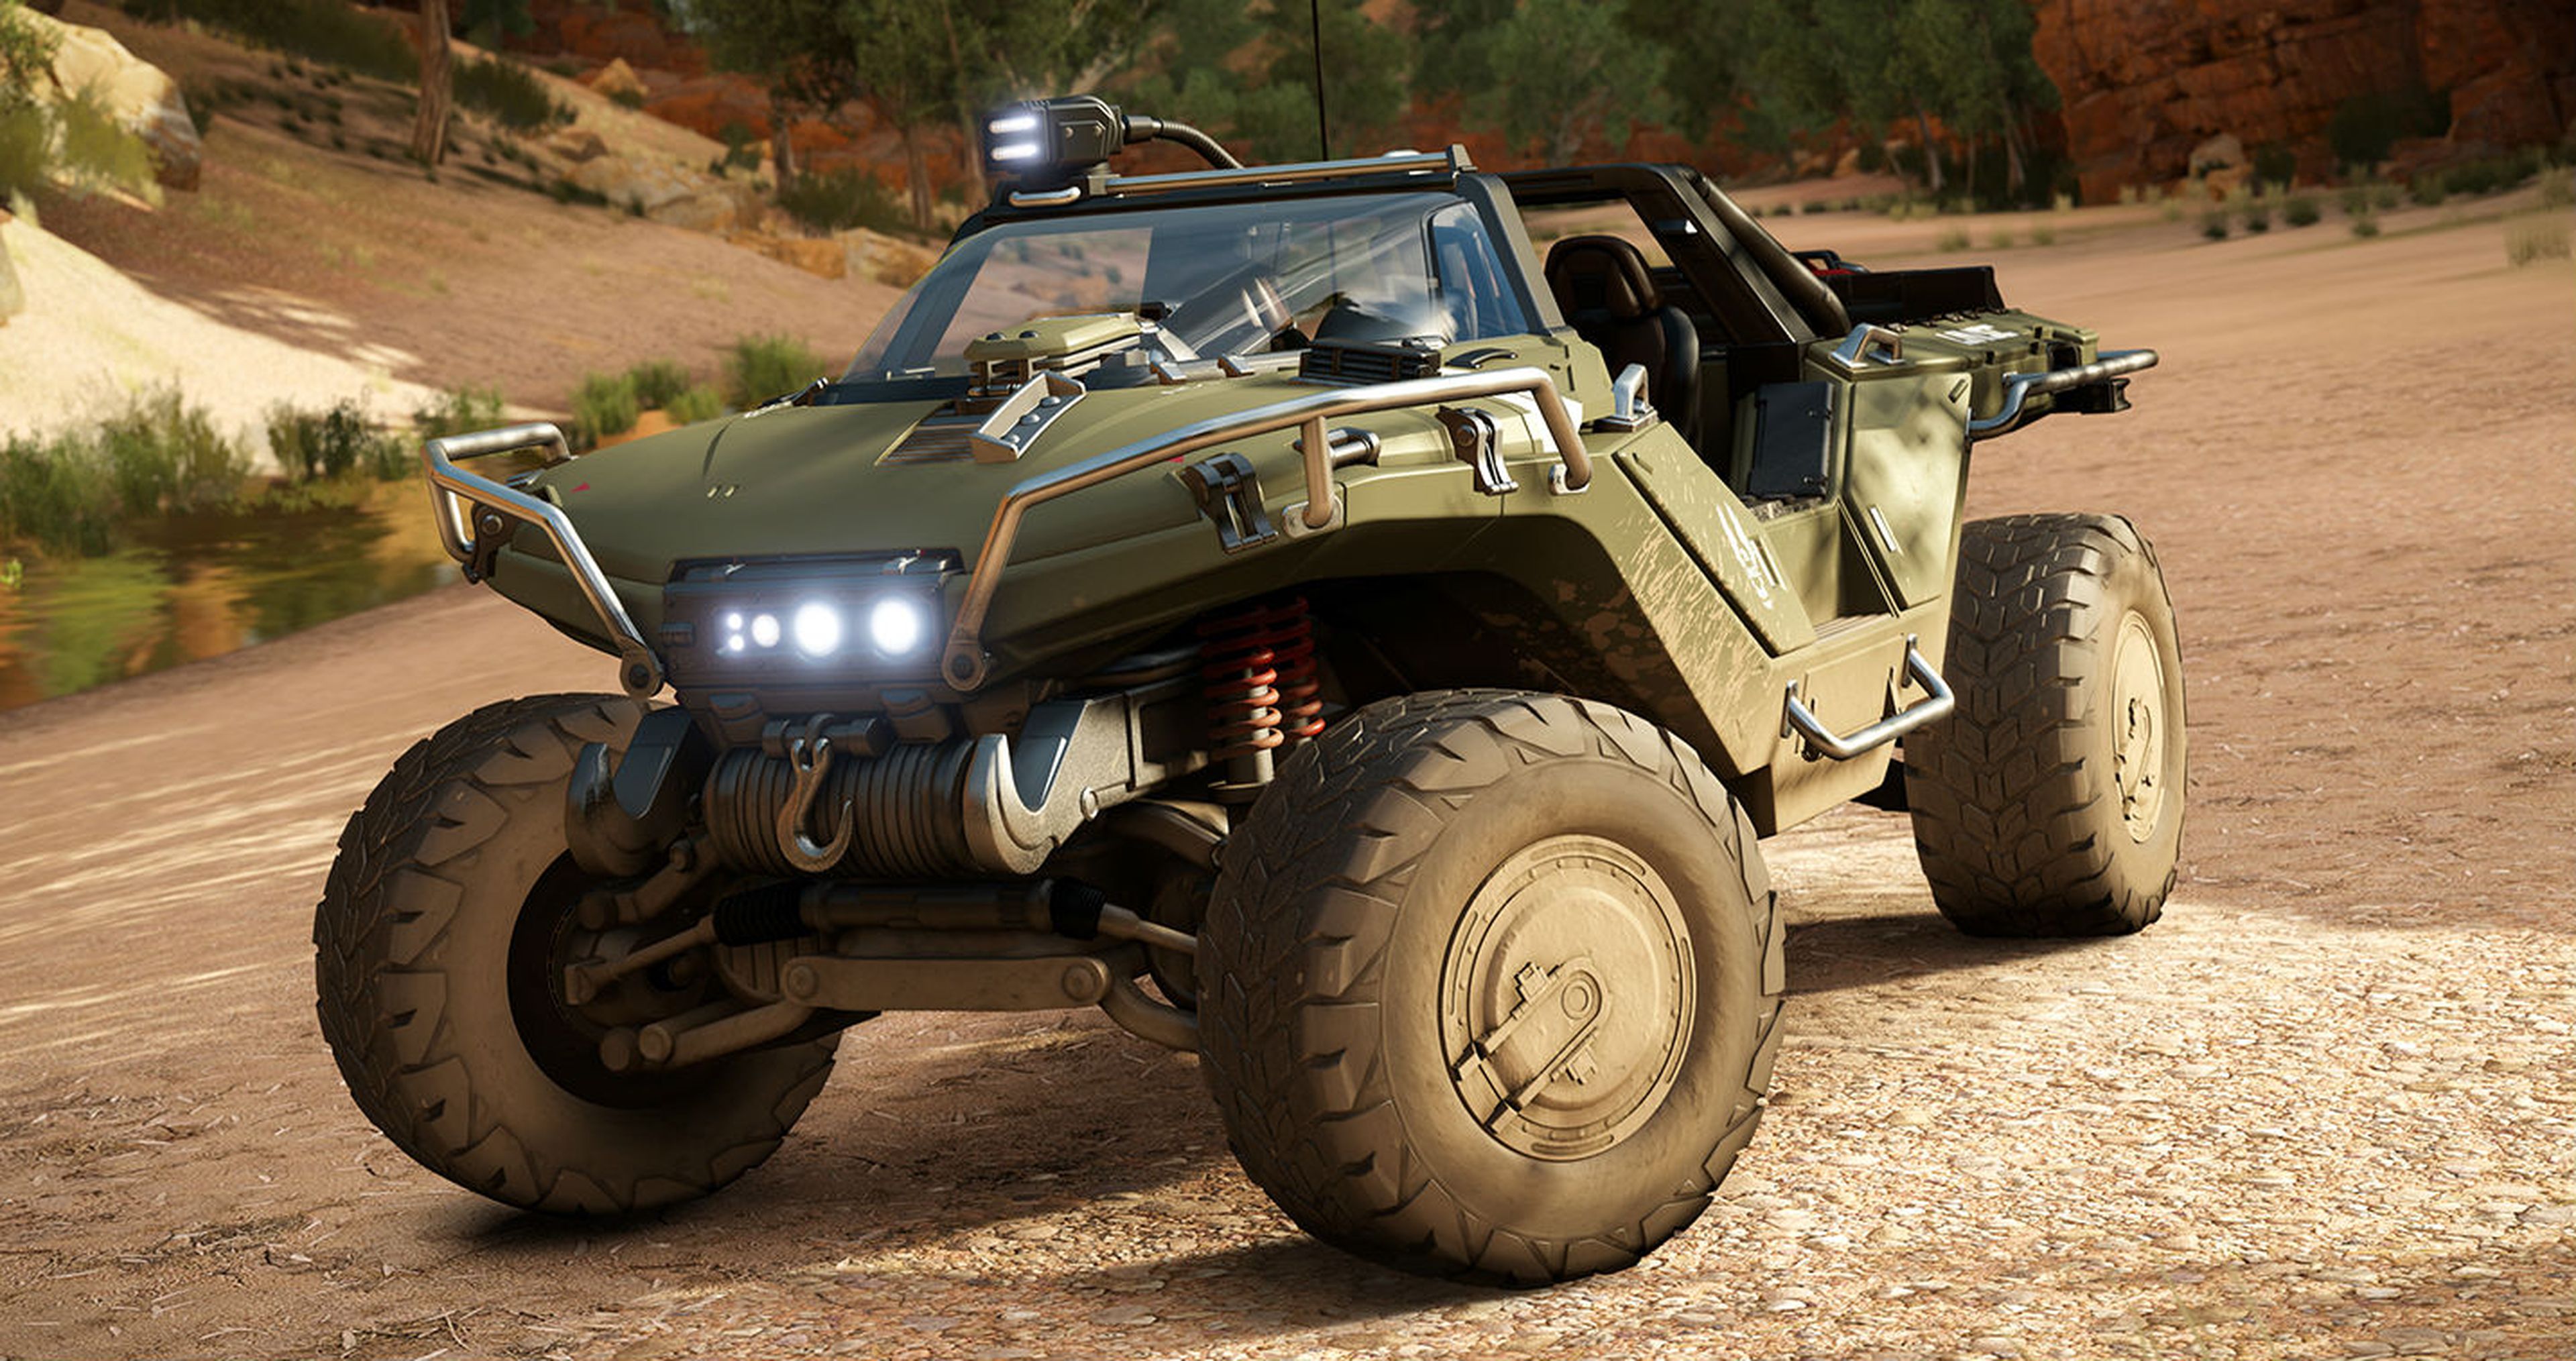 Forza Horizon 3 - Halo Warthog Trailer